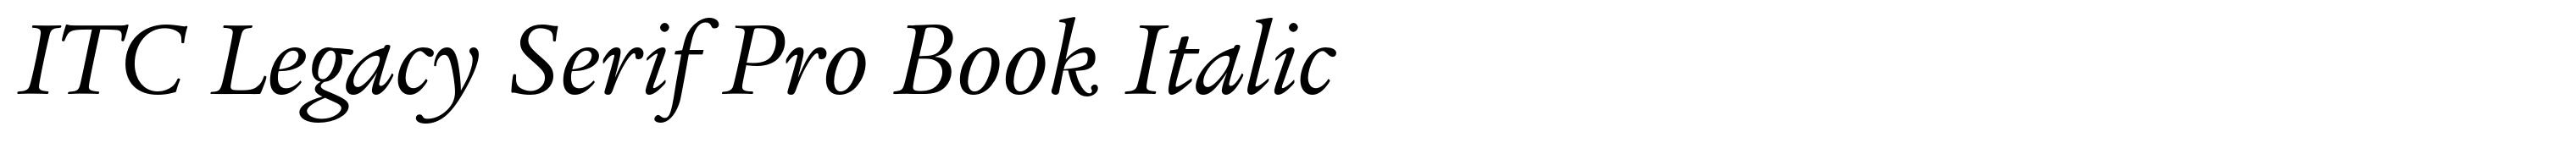 ITC Legacy Serif Pro Book Italic